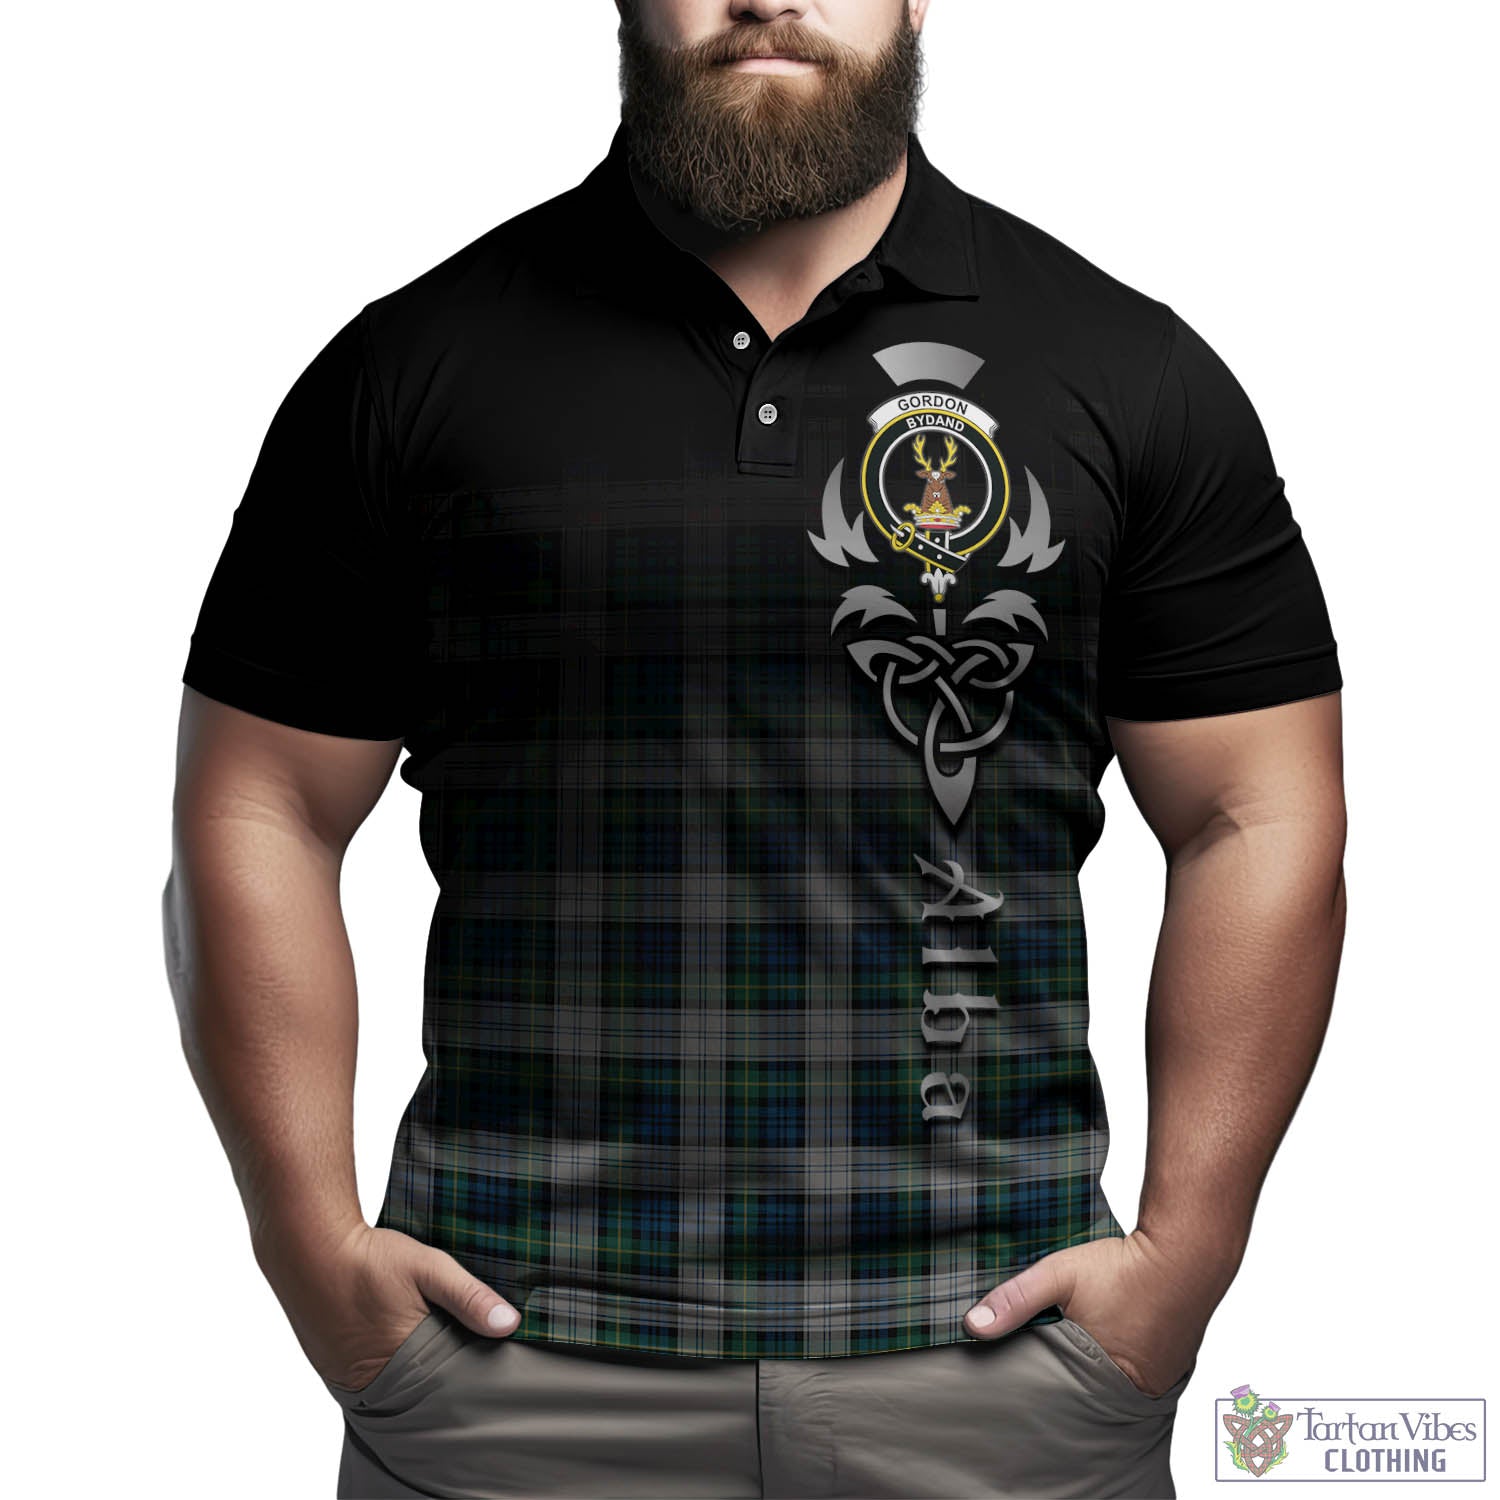 Tartan Vibes Clothing Gordon Dress Ancient Tartan Polo Shirt Featuring Alba Gu Brath Family Crest Celtic Inspired